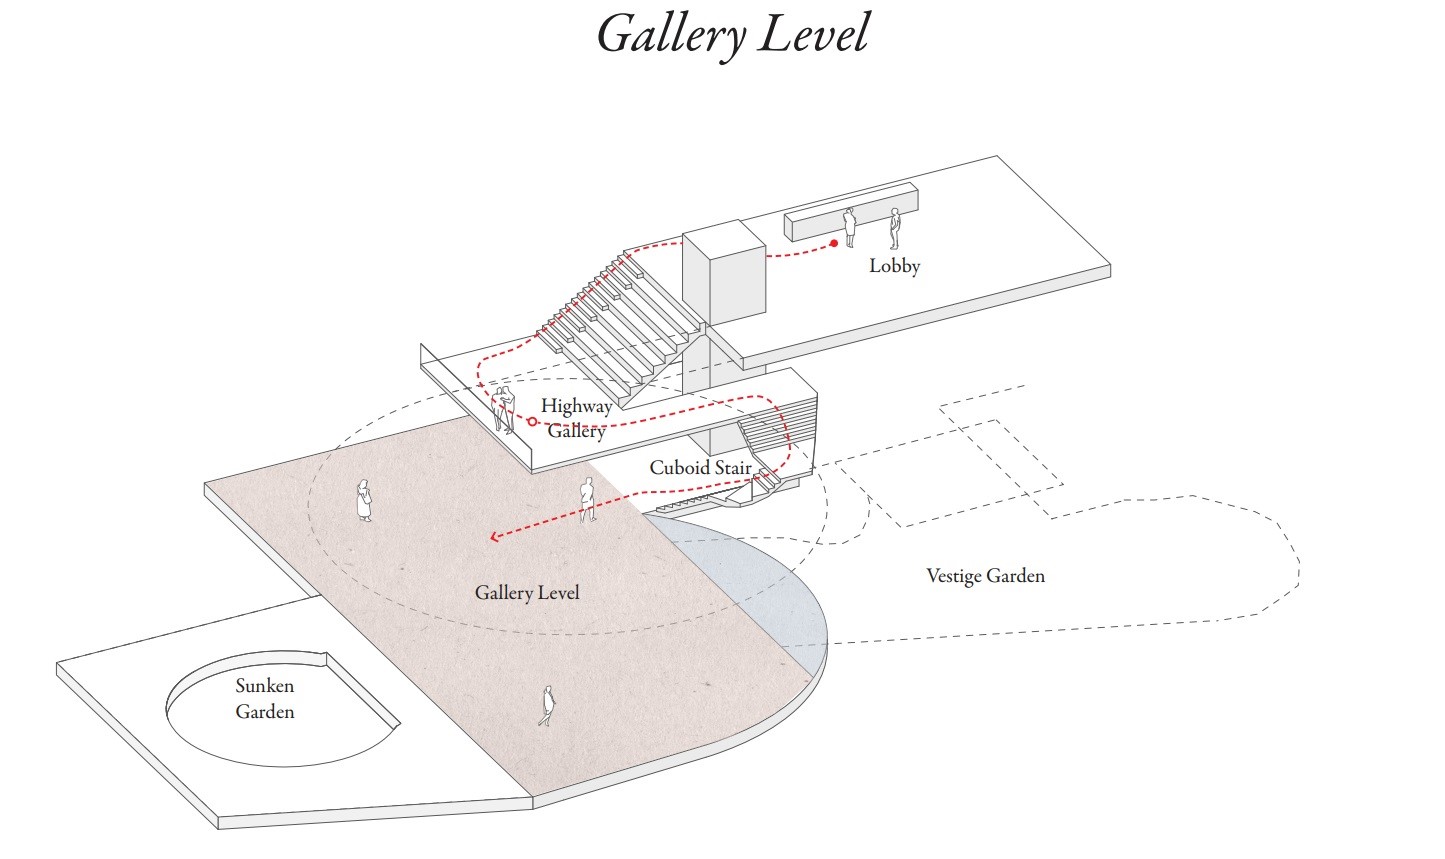 CalderUpdate2-14 Gallery Level